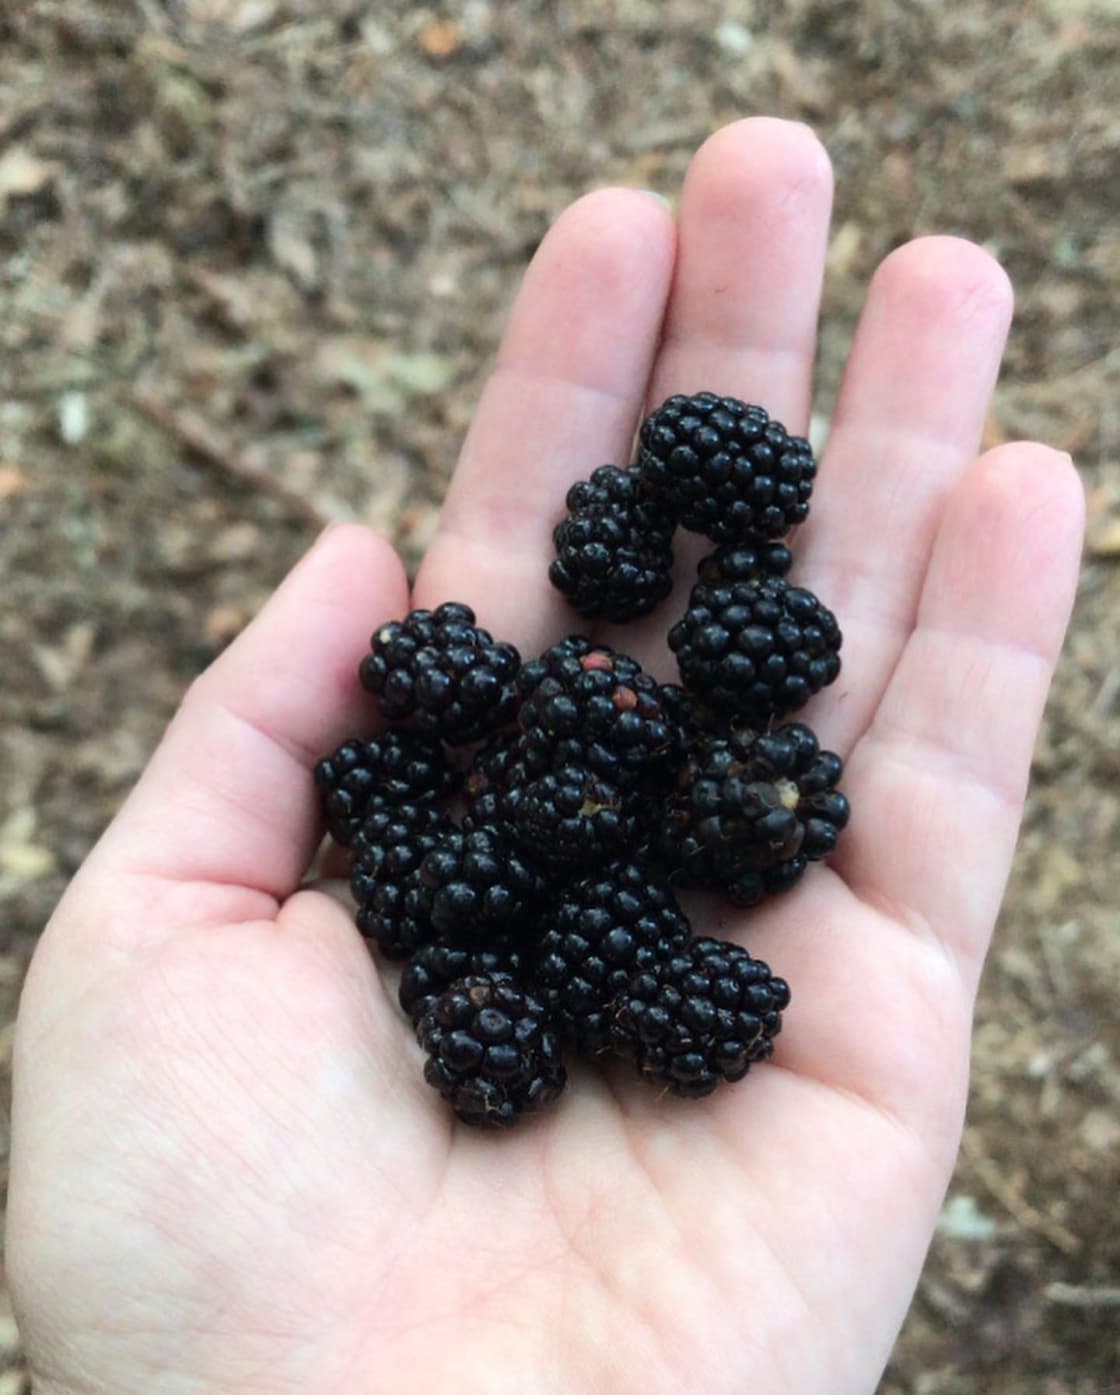 Wild Blackberries I found along the path 